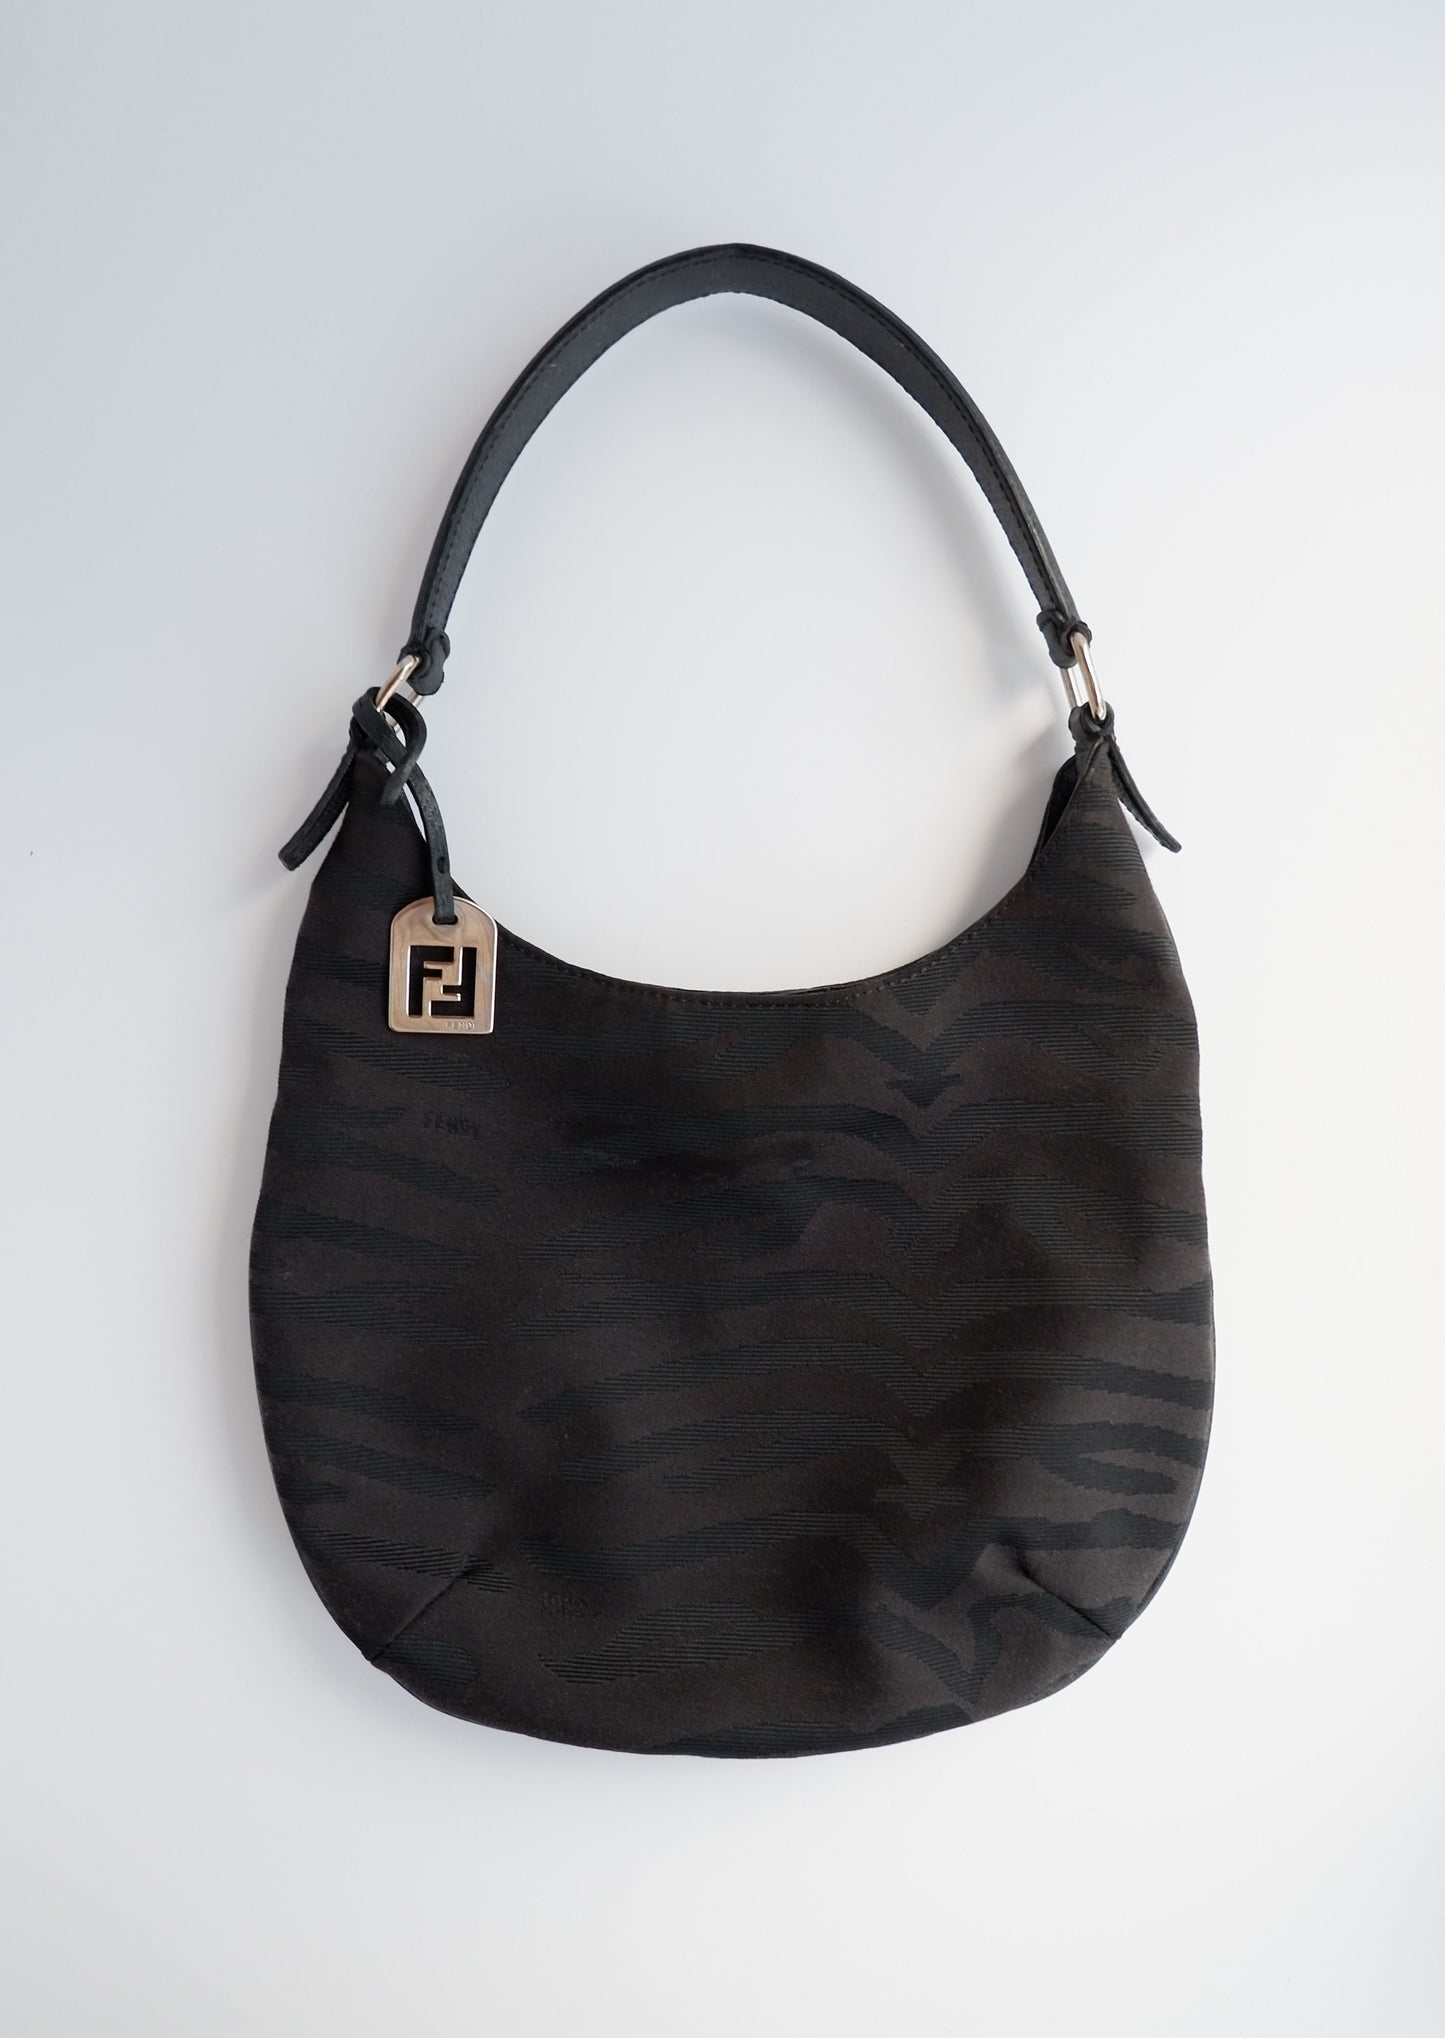 Authentic Preowned Fendi Black Canvas Animal Print Hobo Bag